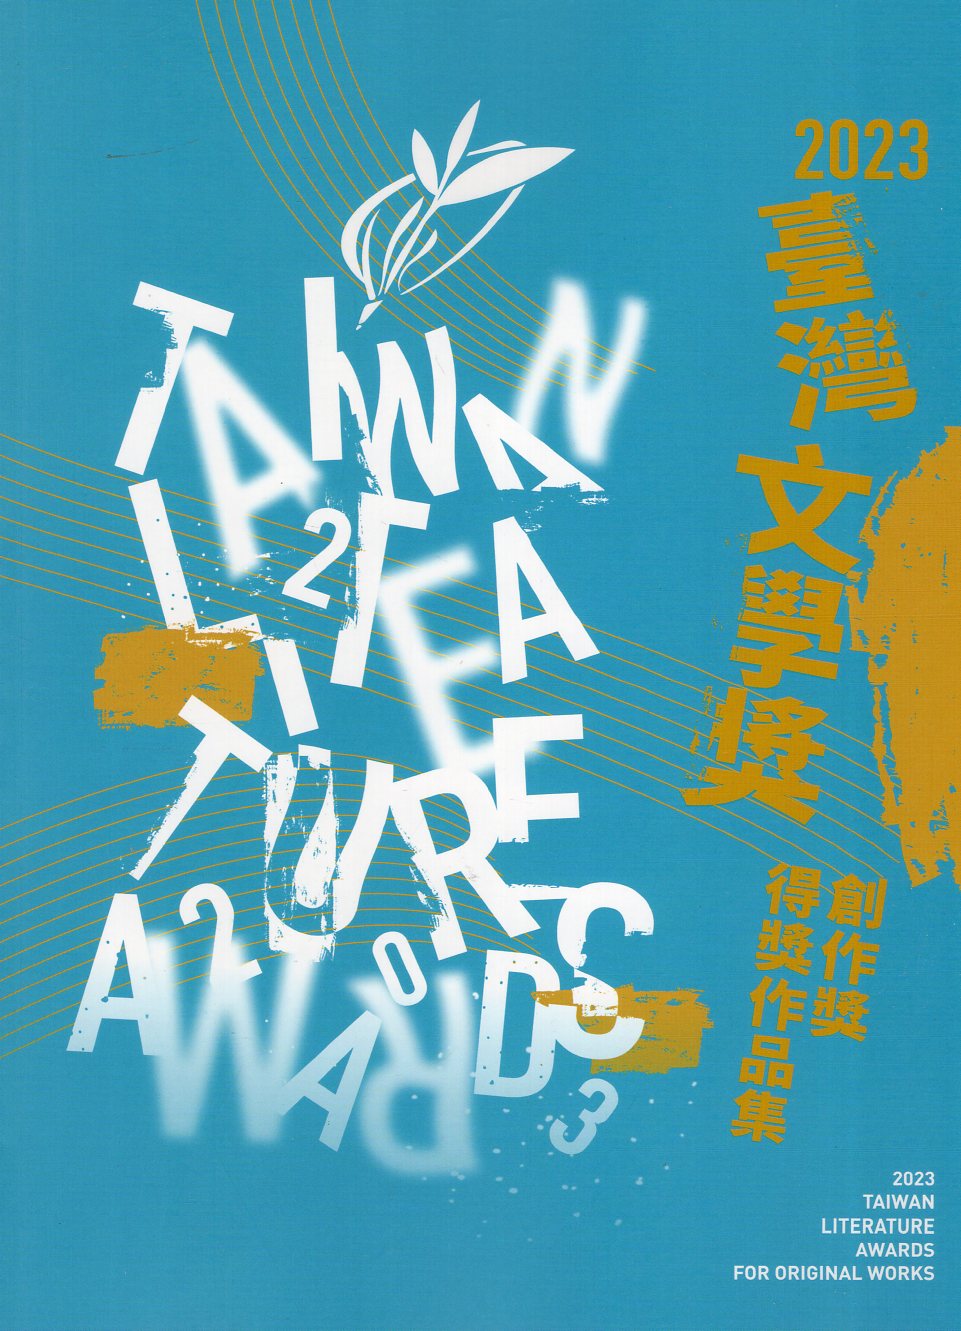 臺灣文學獎創作獎得獎作品集. 2023 = 2023 Taiwan Literature Awards for original works